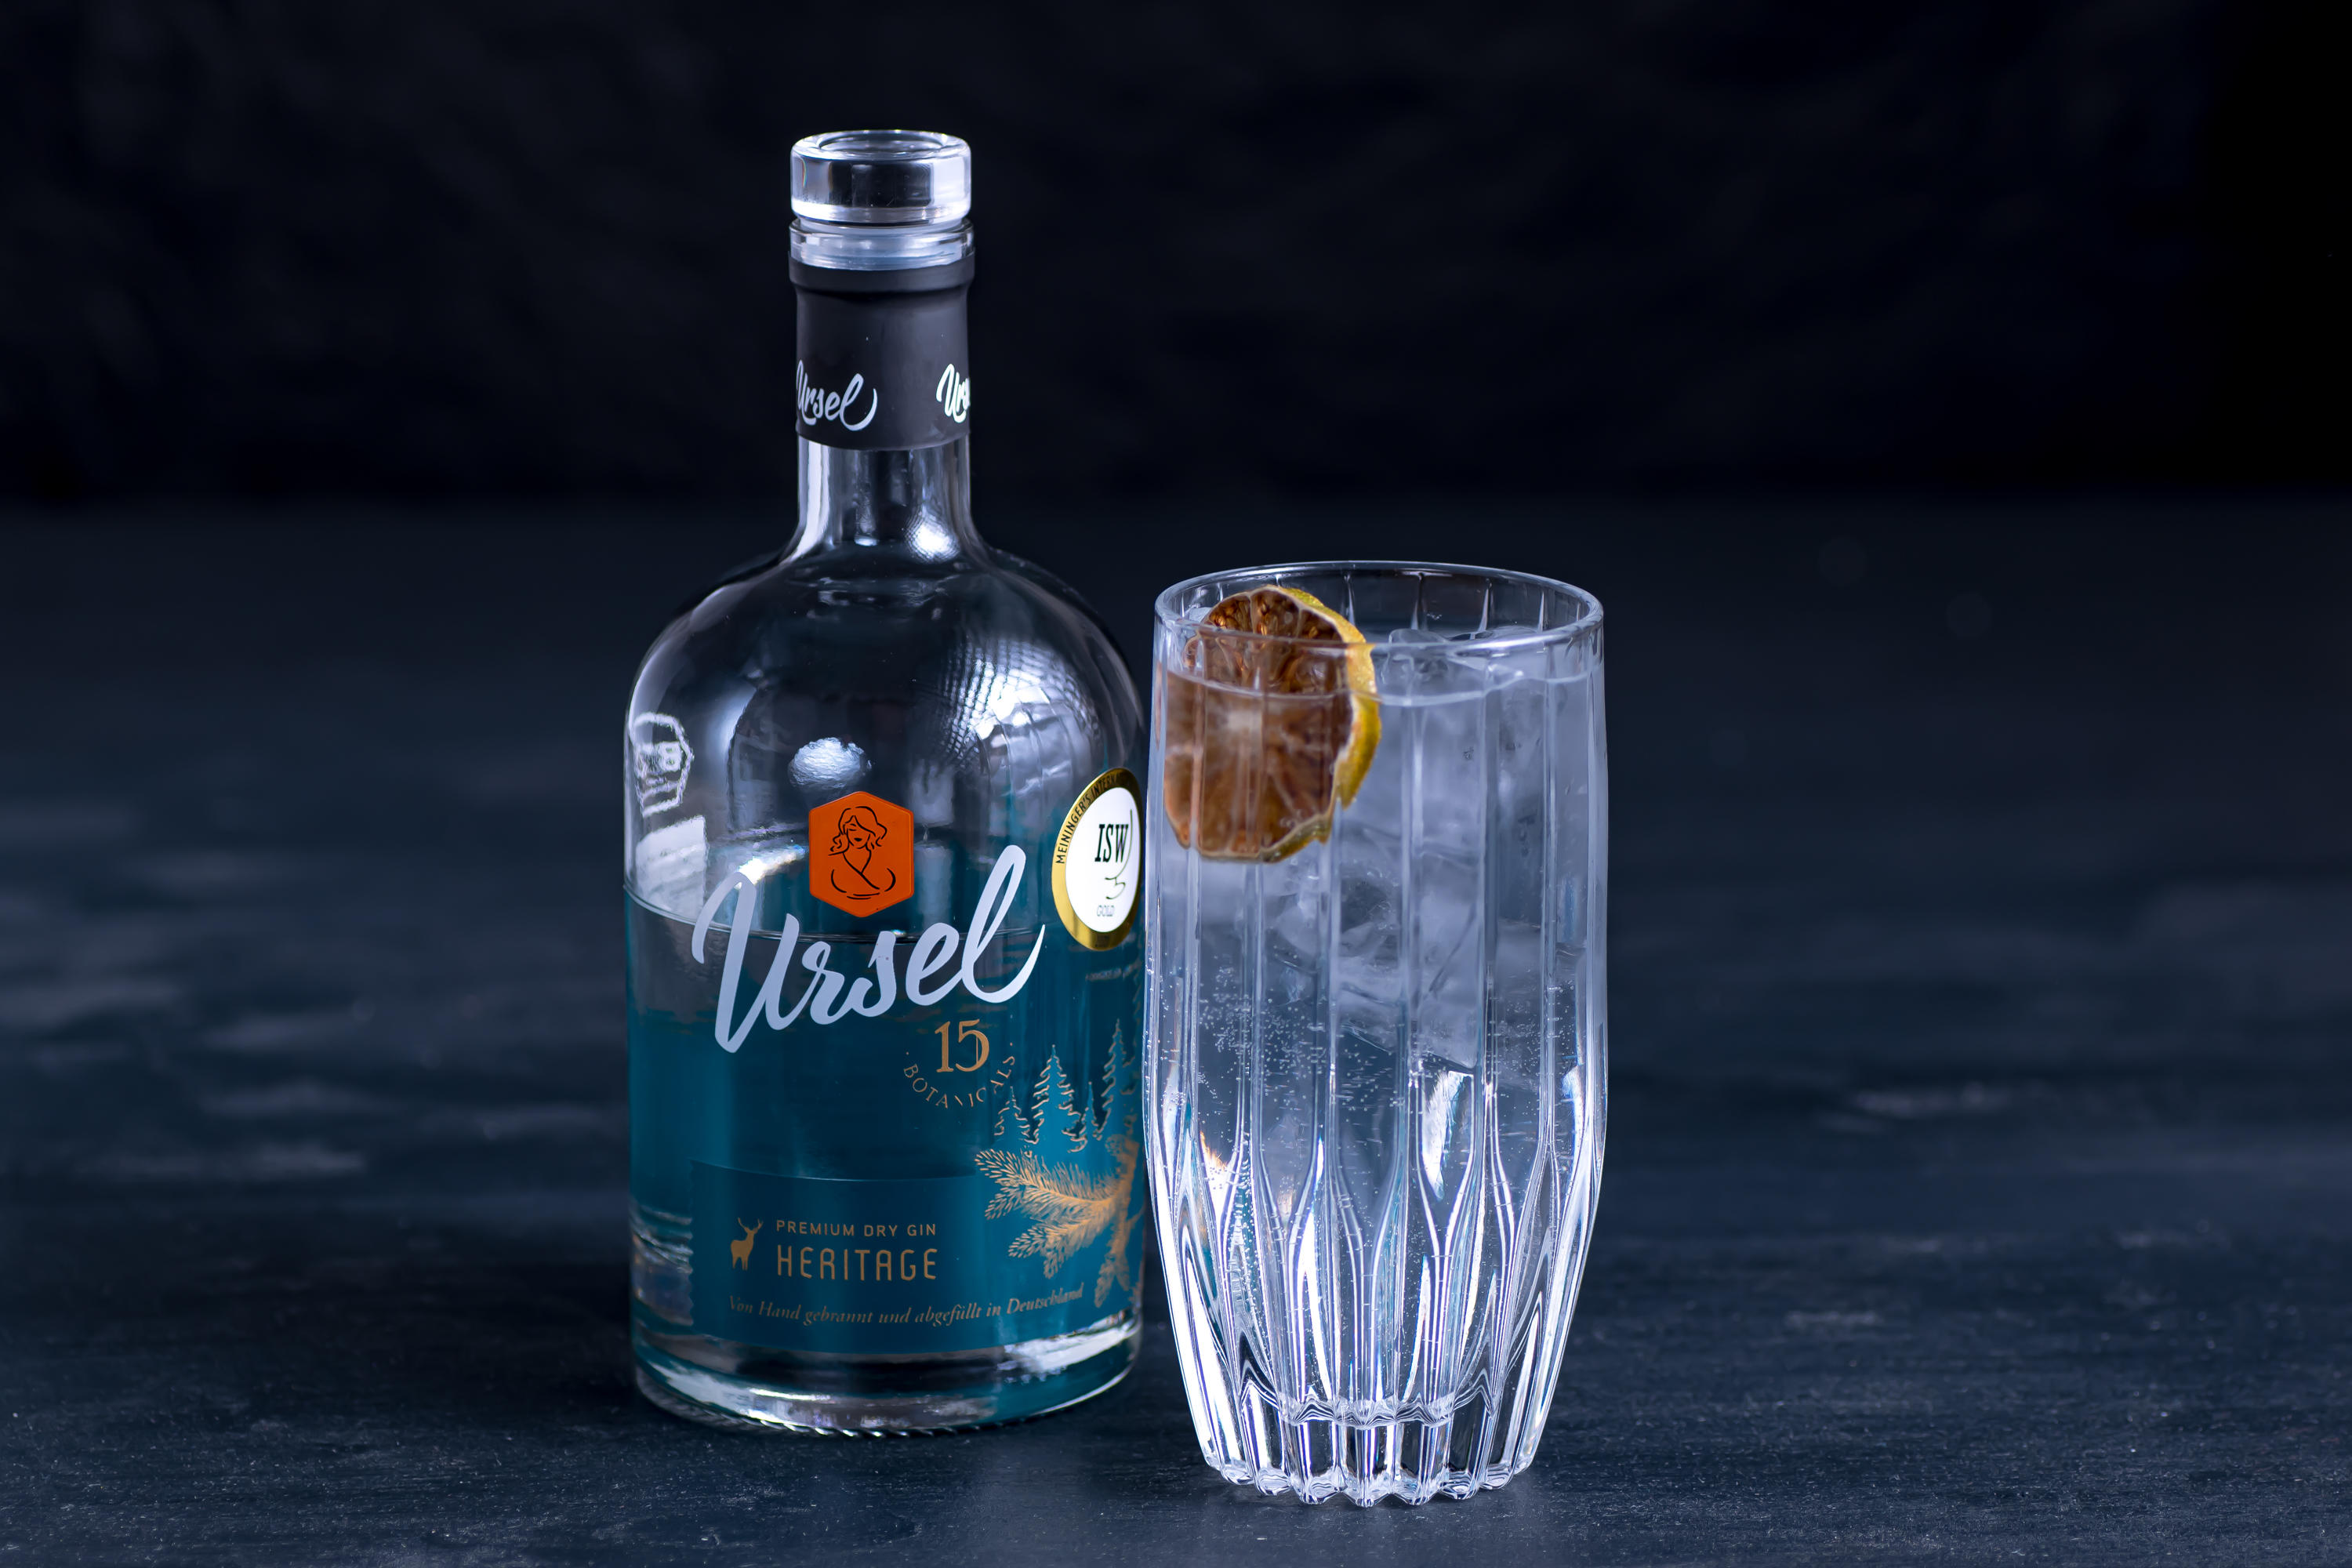 Ursel Heritage Gin And Tonic Cocktailbart Deine Homebar Im Netz